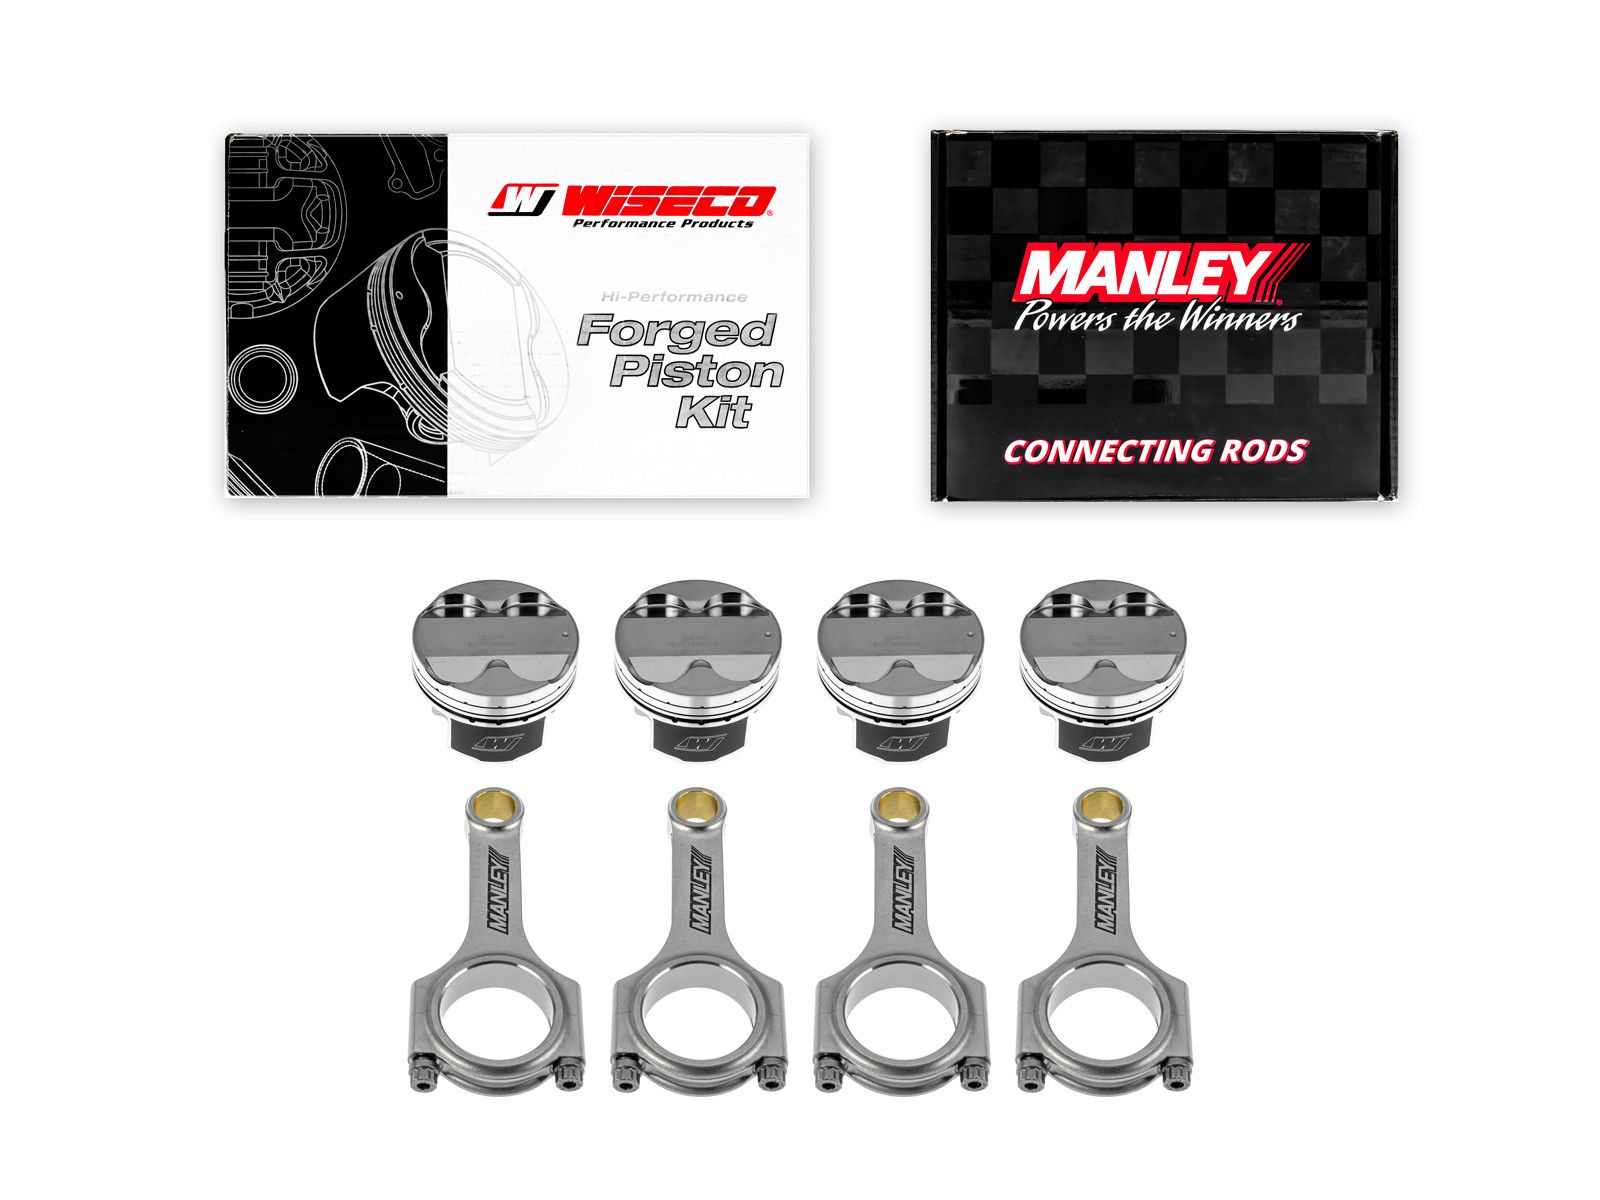 Schmiedekolben Wiseco + Pleuelstangen Manley für Mazda Miata MX-5 / Protege  1.8l 16V BP 84.00mm CR 8.5 K553M84-14011-4 - Fmic.pl